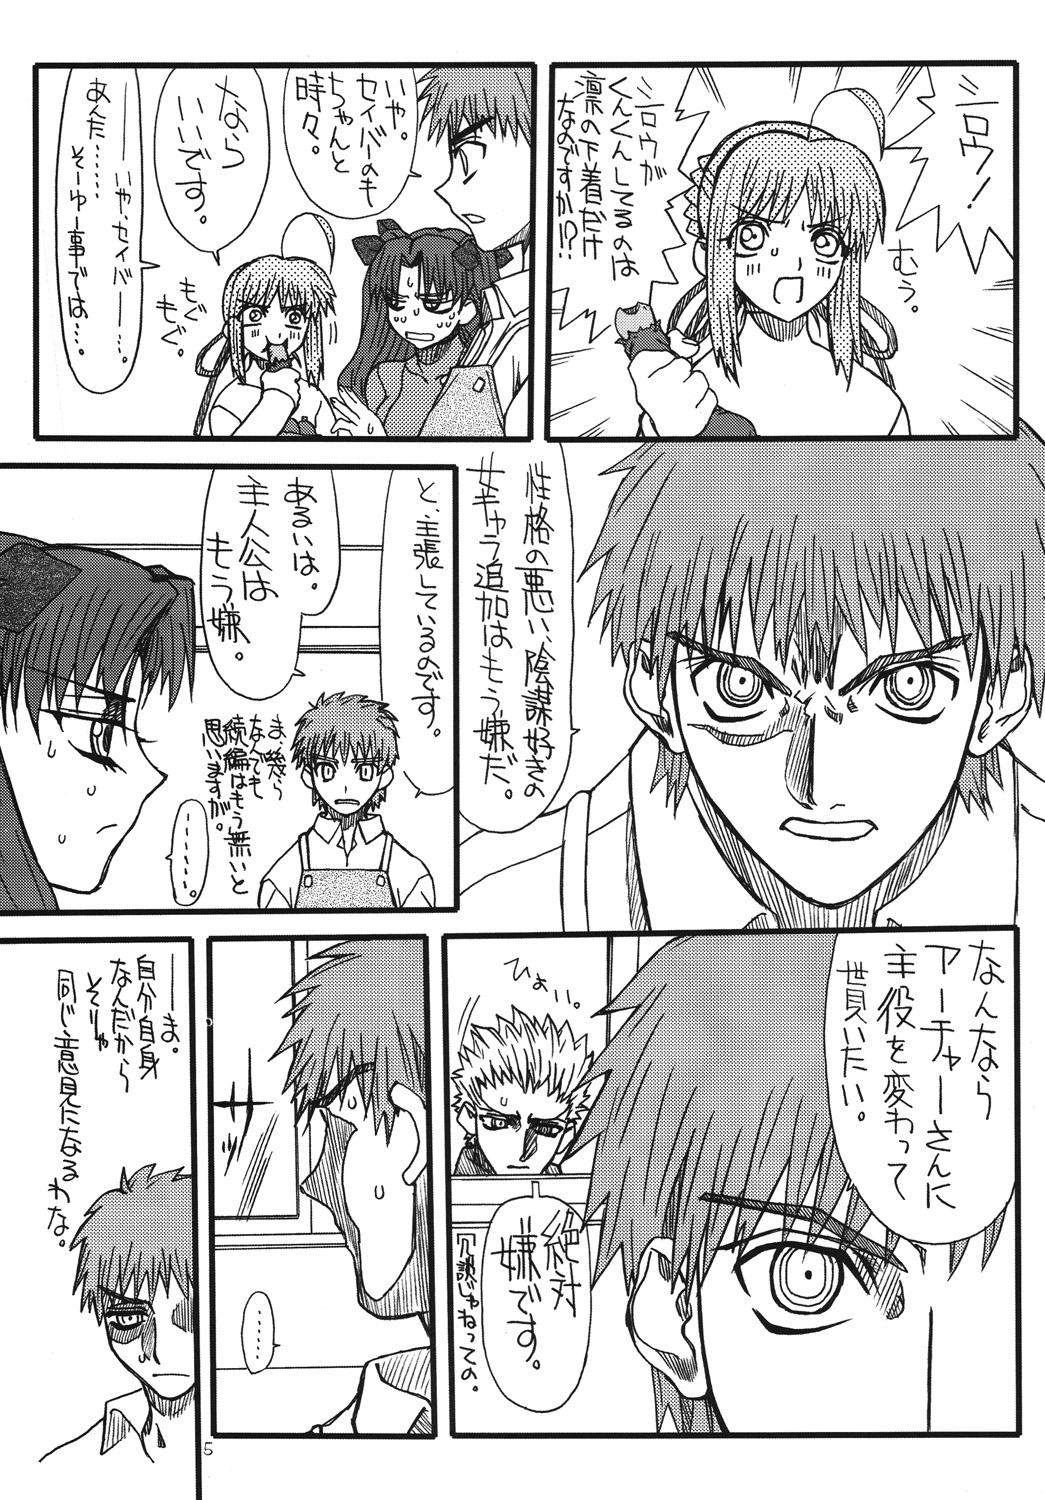 Story Kurenai Hoppe 2 - Fate stay night 8teenxxx - Page 4